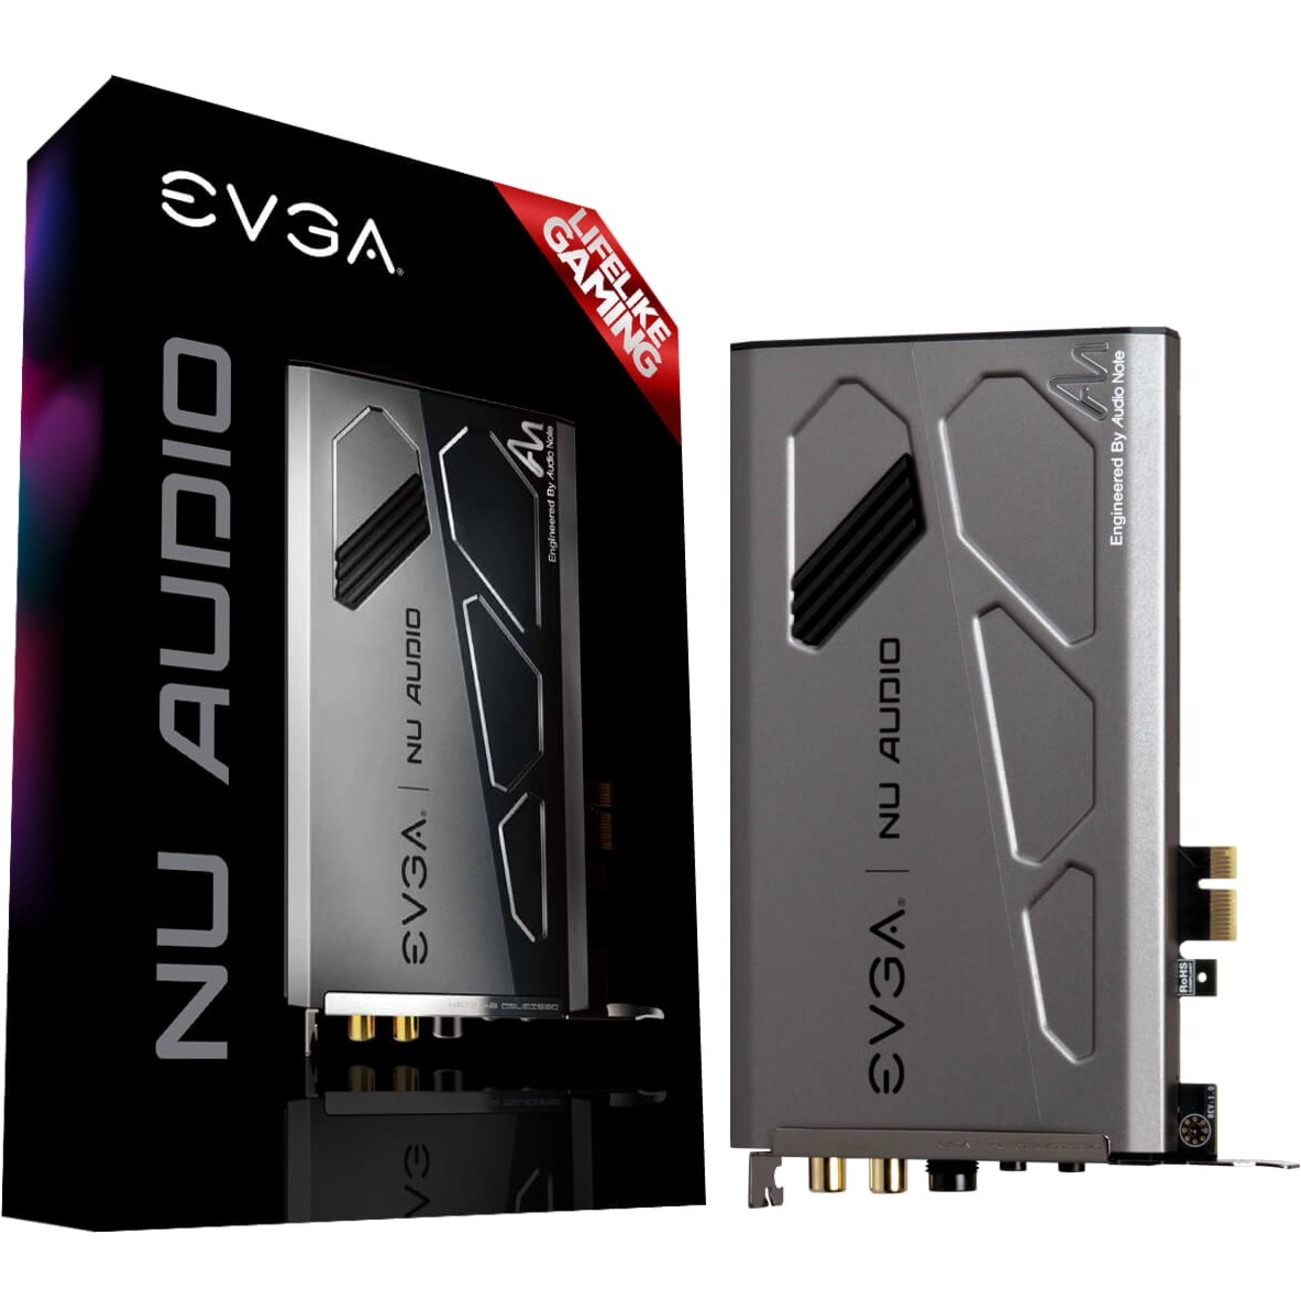 EVGA Nu Audio PCIe Sound Card - image 1 of 7